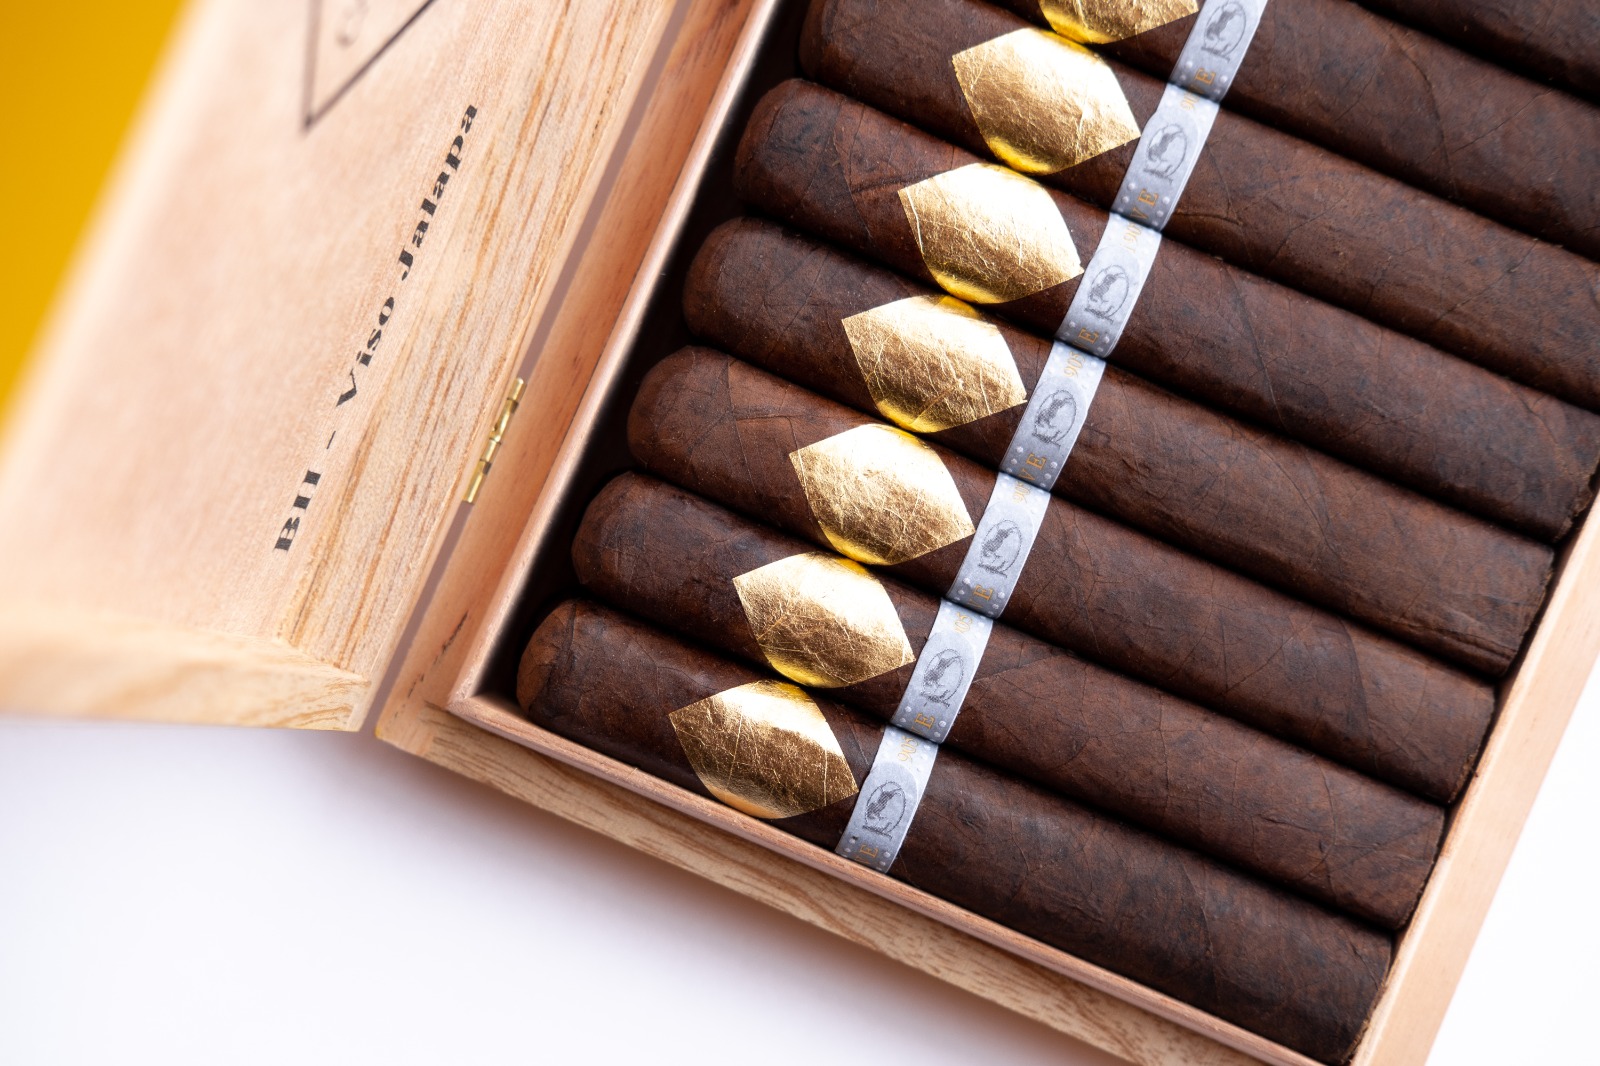 BII Viso Jalapa Coming from Cavalier Genève - Cigar News